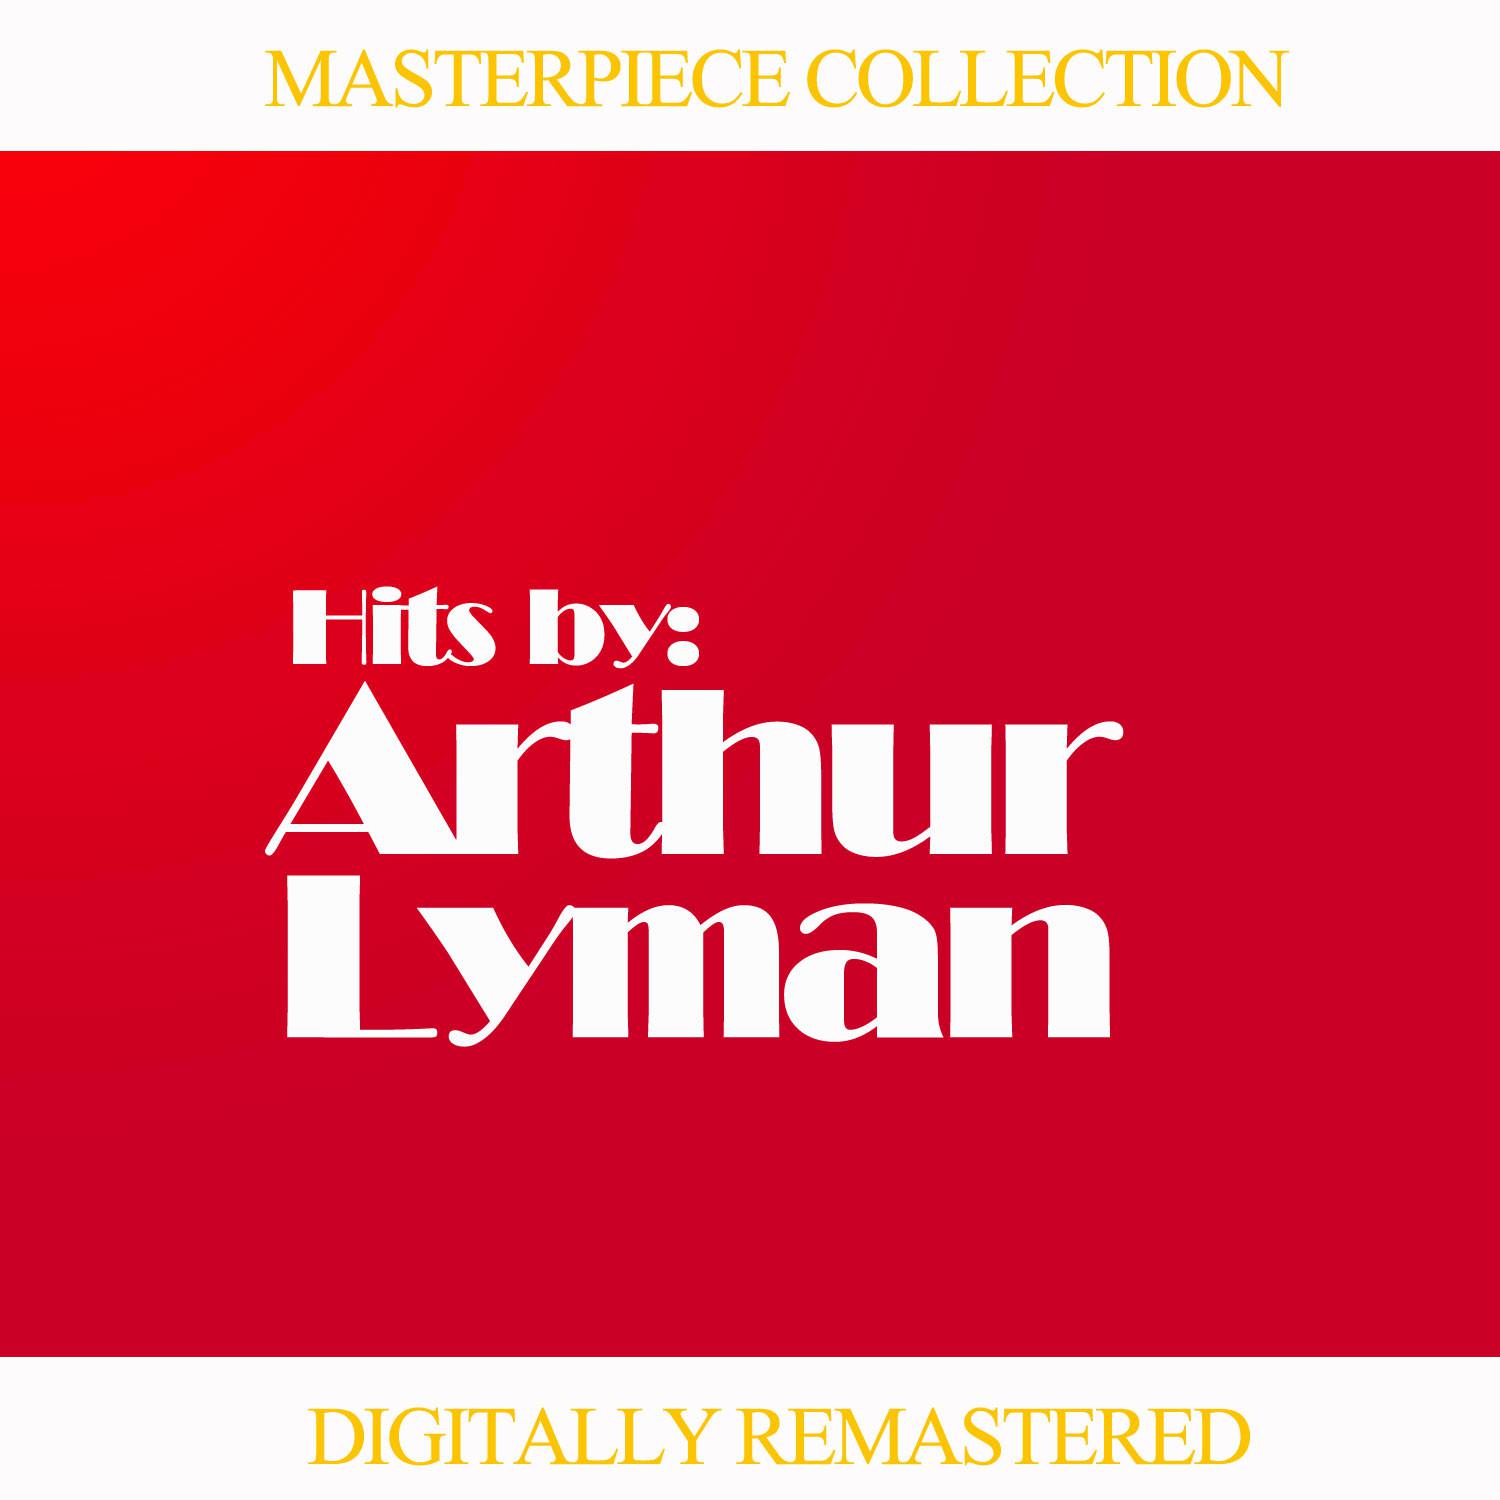 Masterpiece Collection of Arthur Lyman